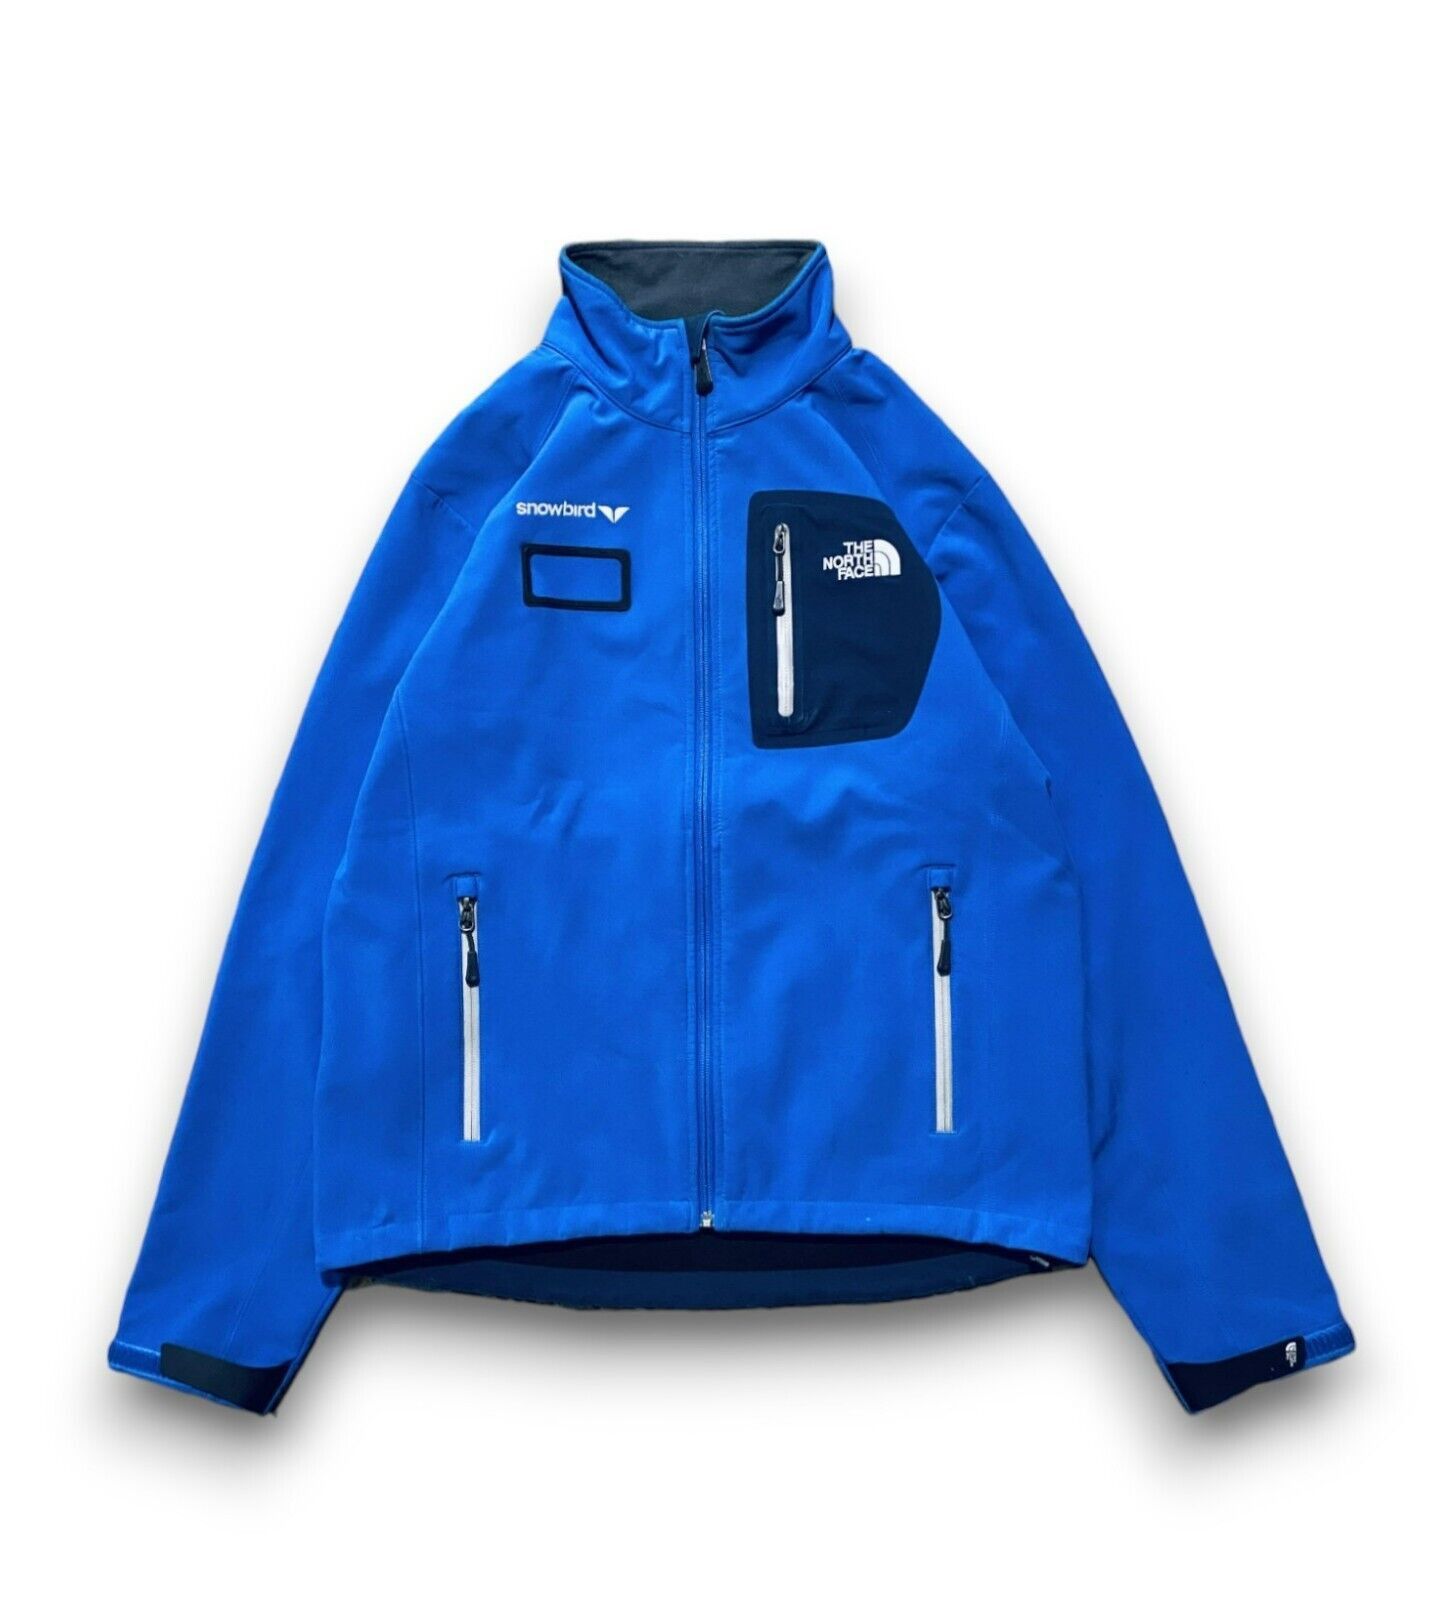 The North Face Jacket Blue Navy Zip Ski Snowbird Coat - 1